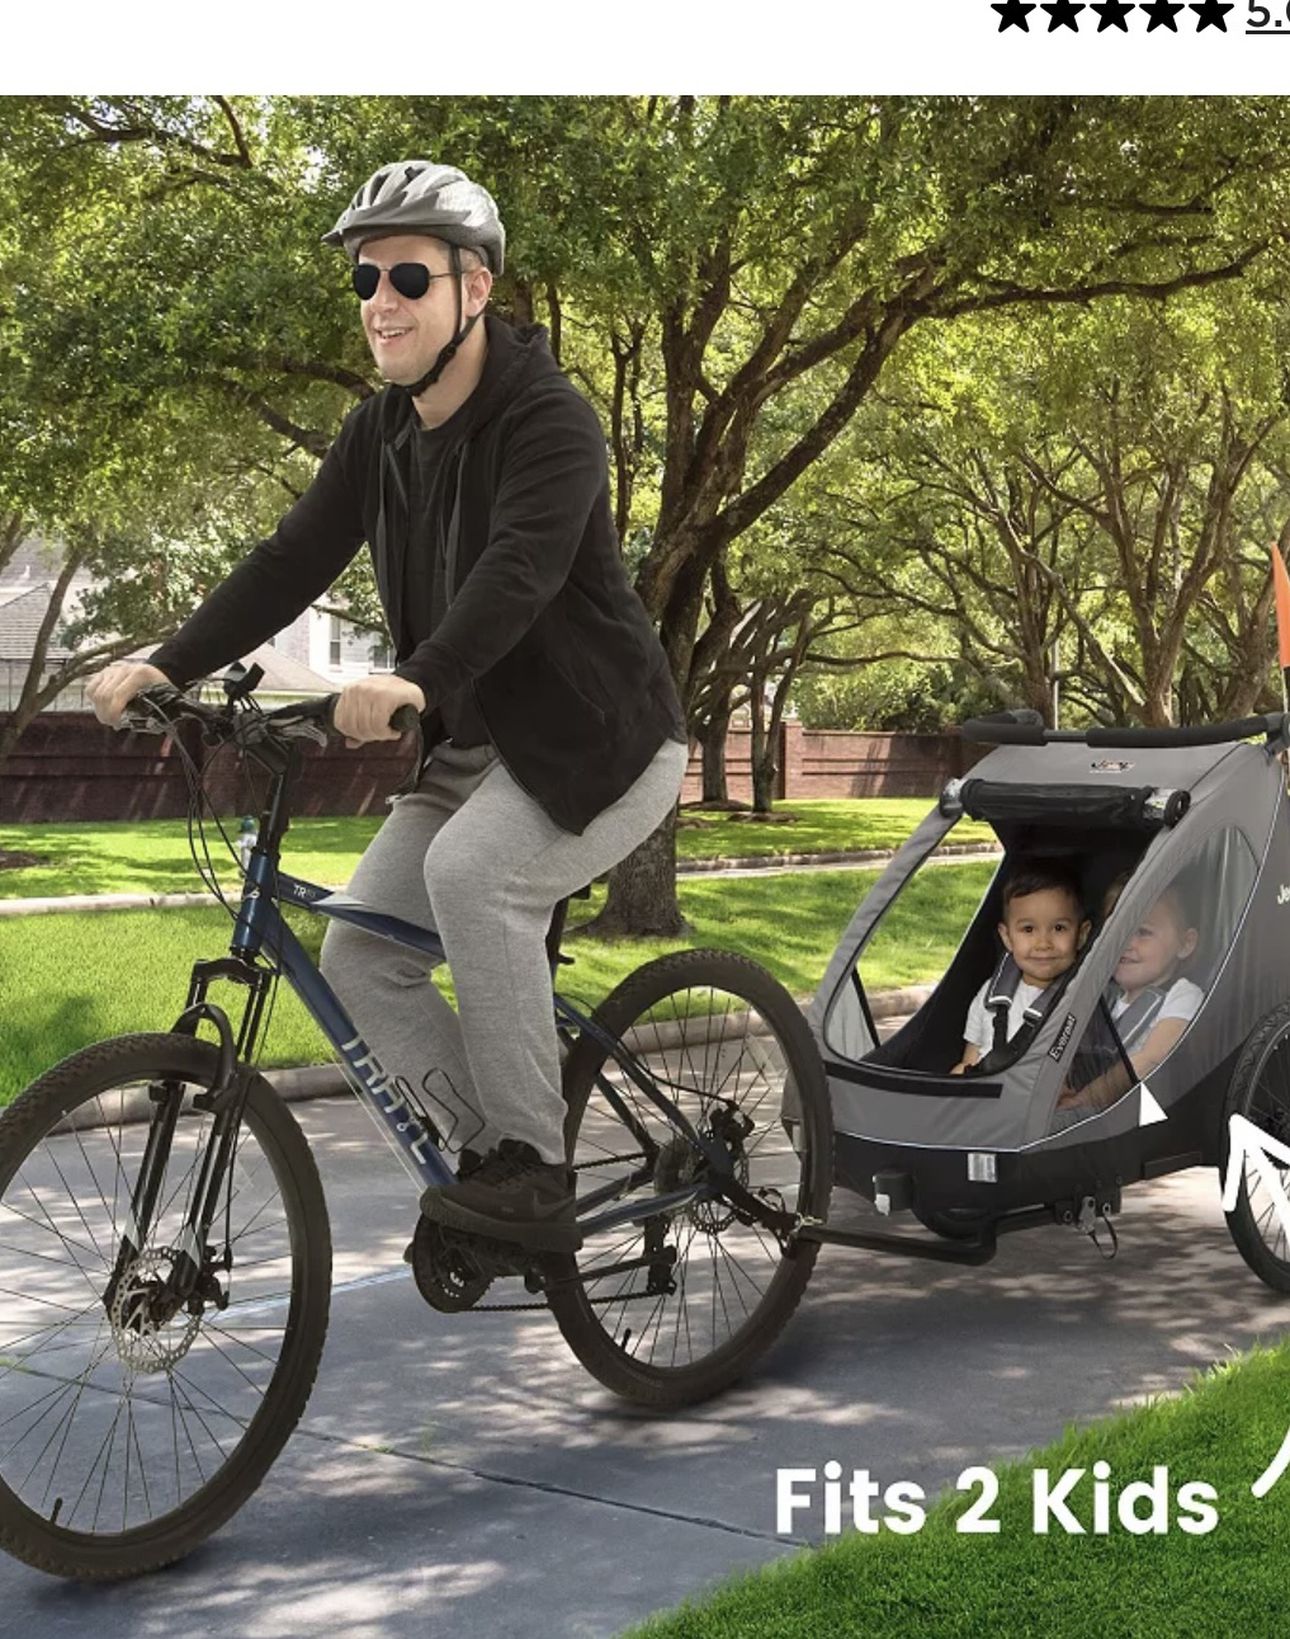 Jeep Child Bike Trailer (New) 